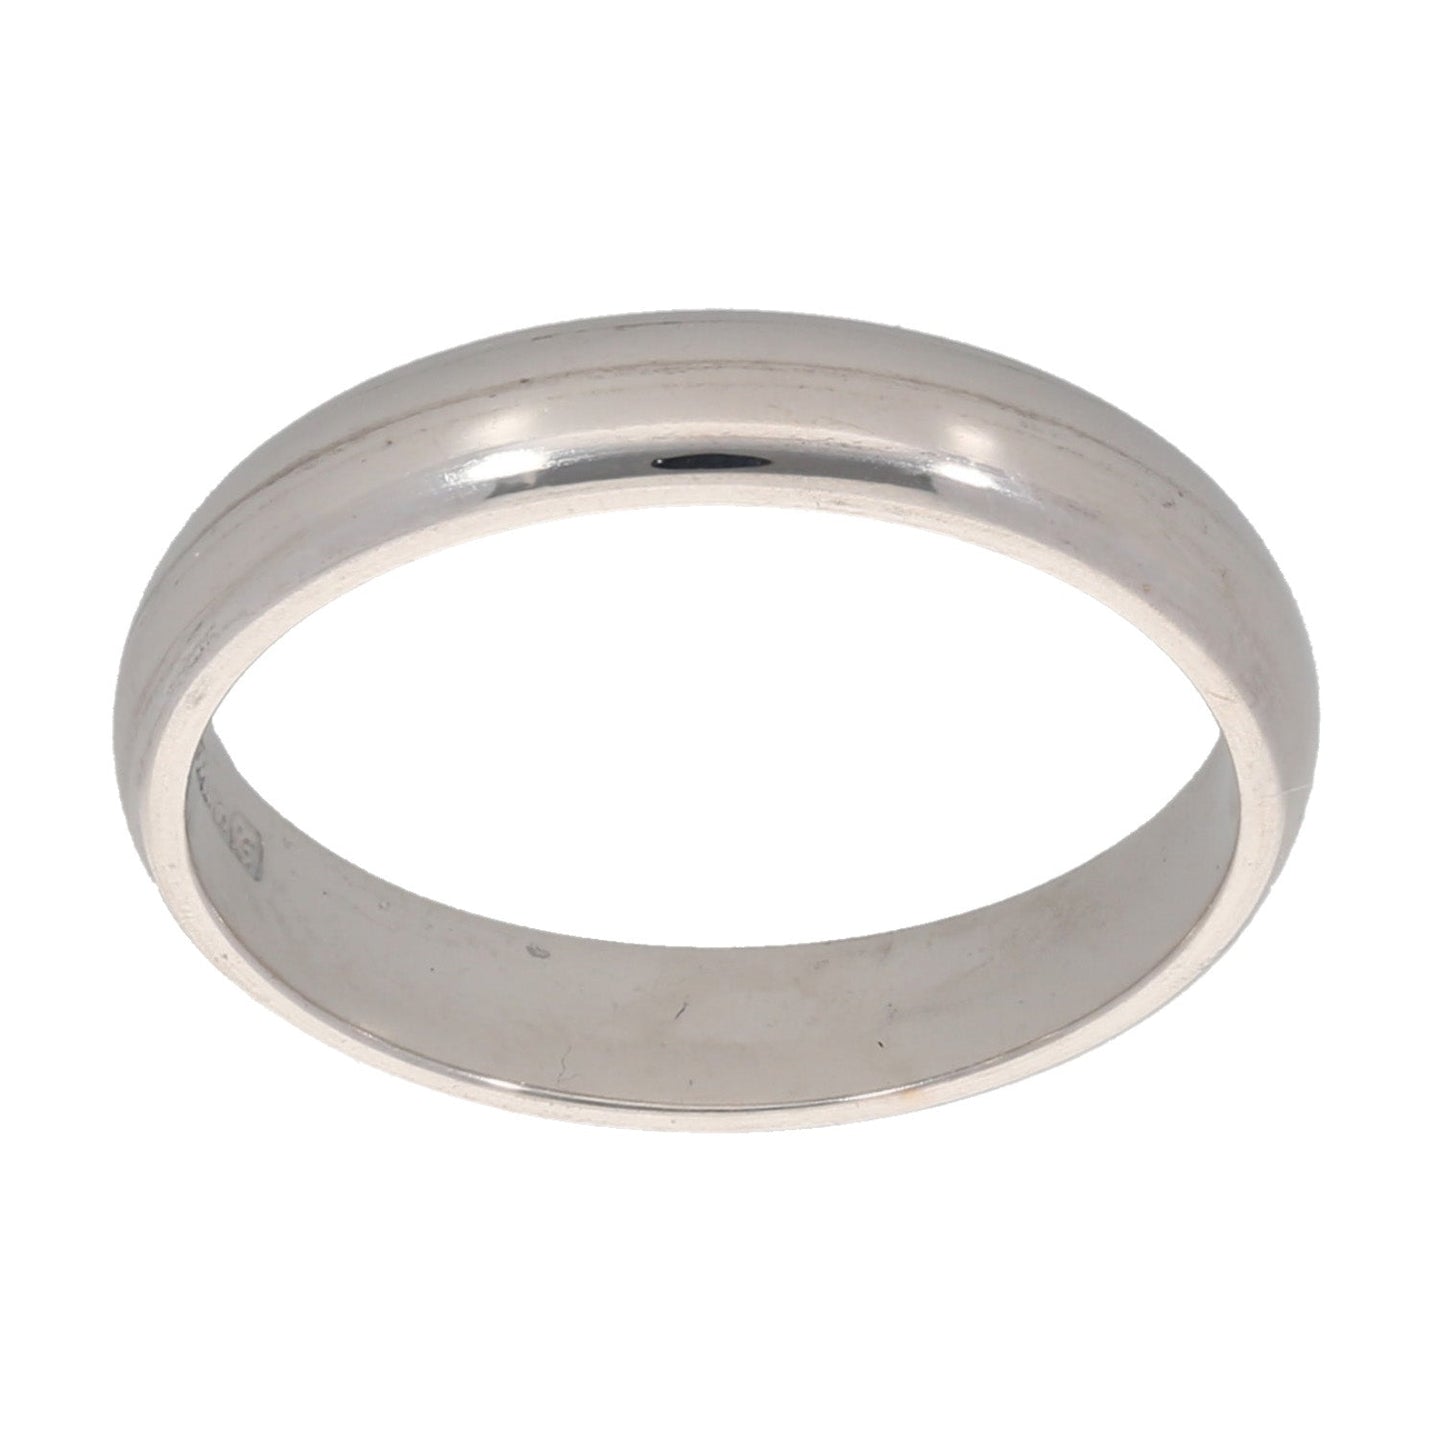 18ct White Gold Plain Wedding Ring Size M